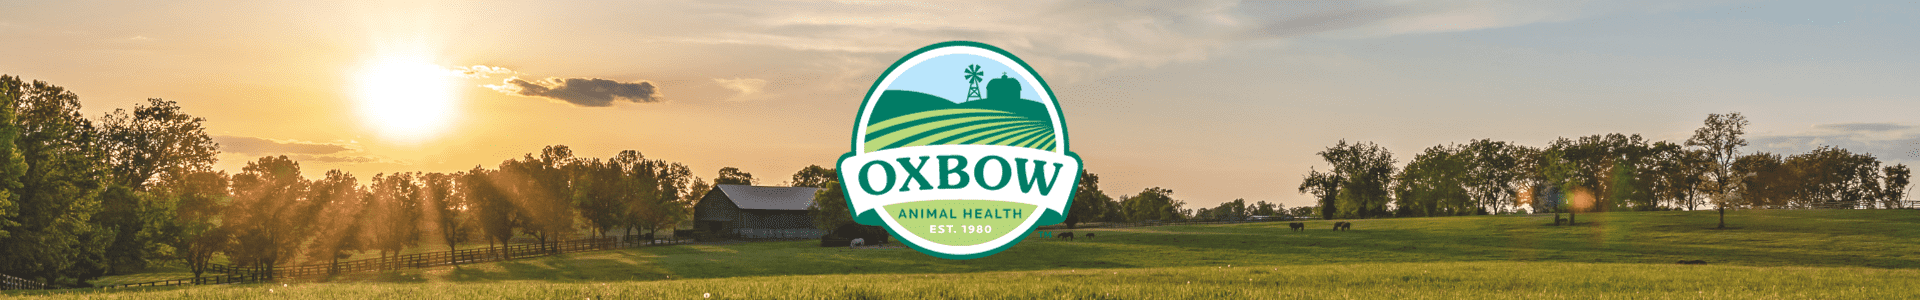 oxbow-animal-health-brand